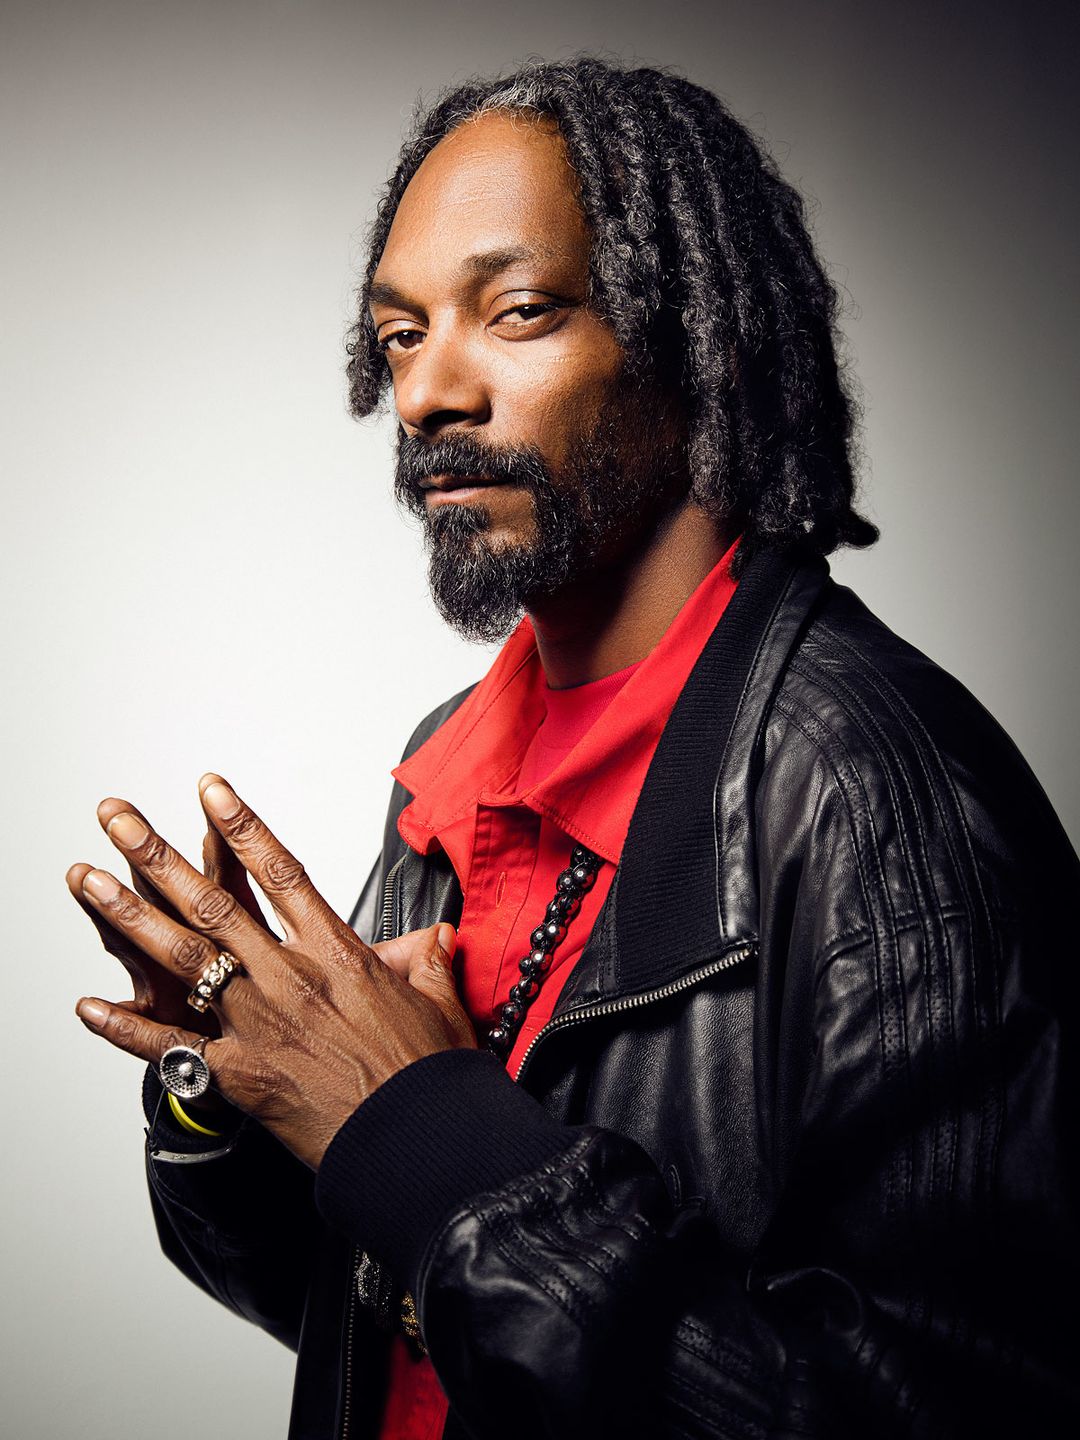 Snoop Dogg interesting facts